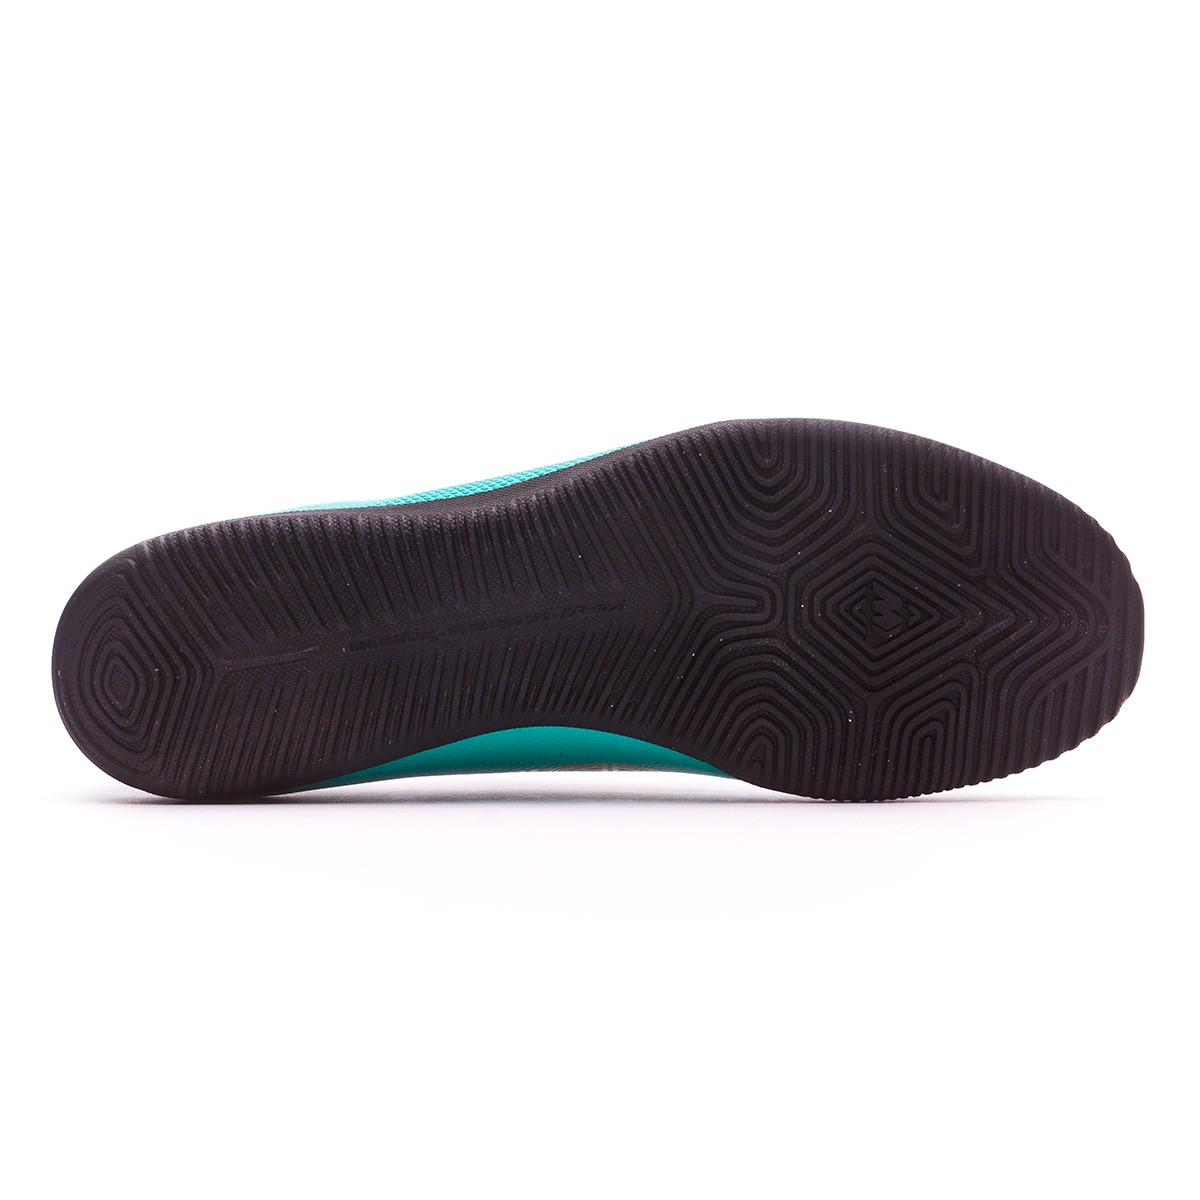 Nike Mercurial Vapor 12 Pro TF (AH7388 070) Soccer Shoes